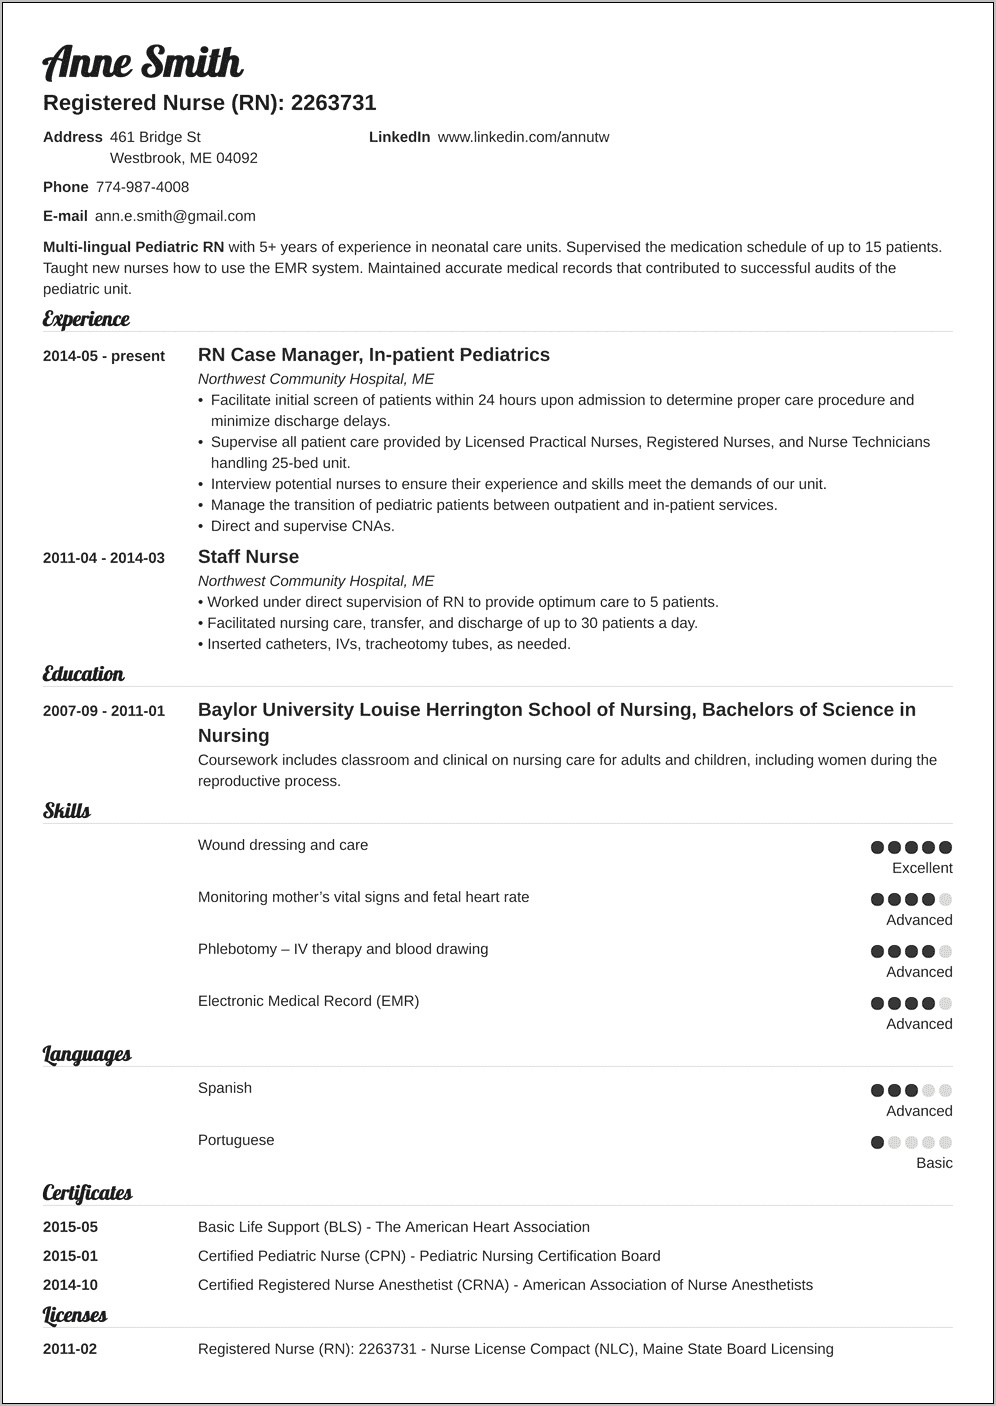 Resume With Skilled Nursing Experience